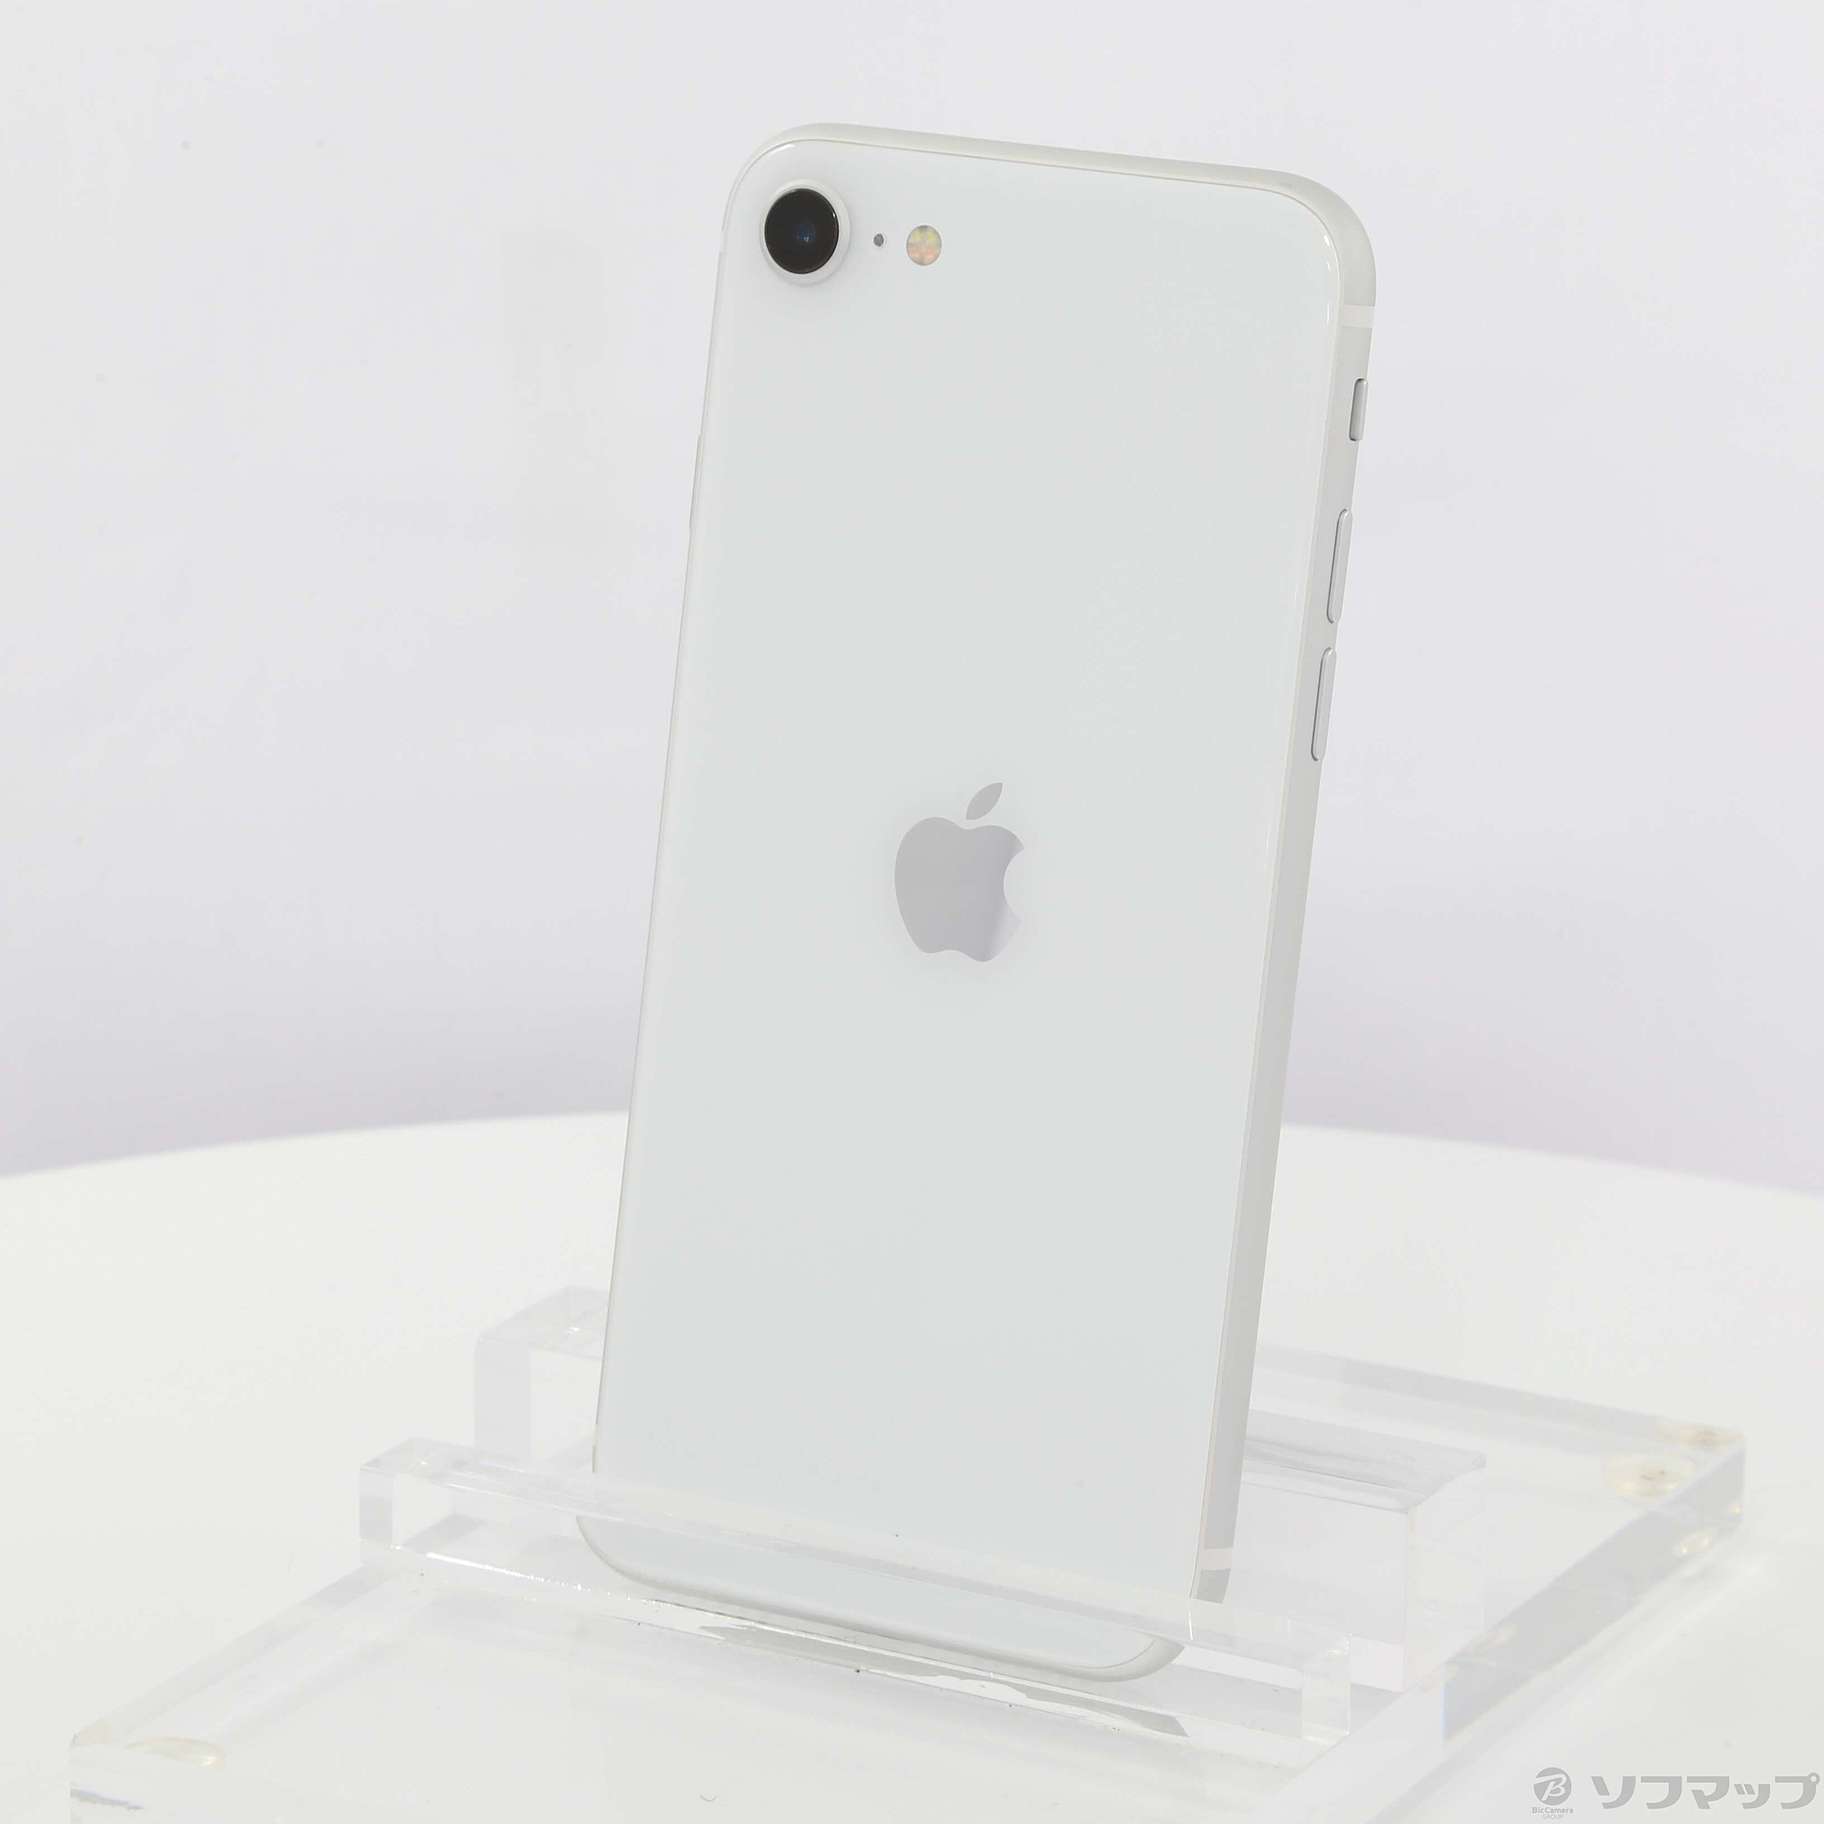 iPhone SE 第2世代 ホワイト 64GB SIMフリー ジャンク - 携帯電話